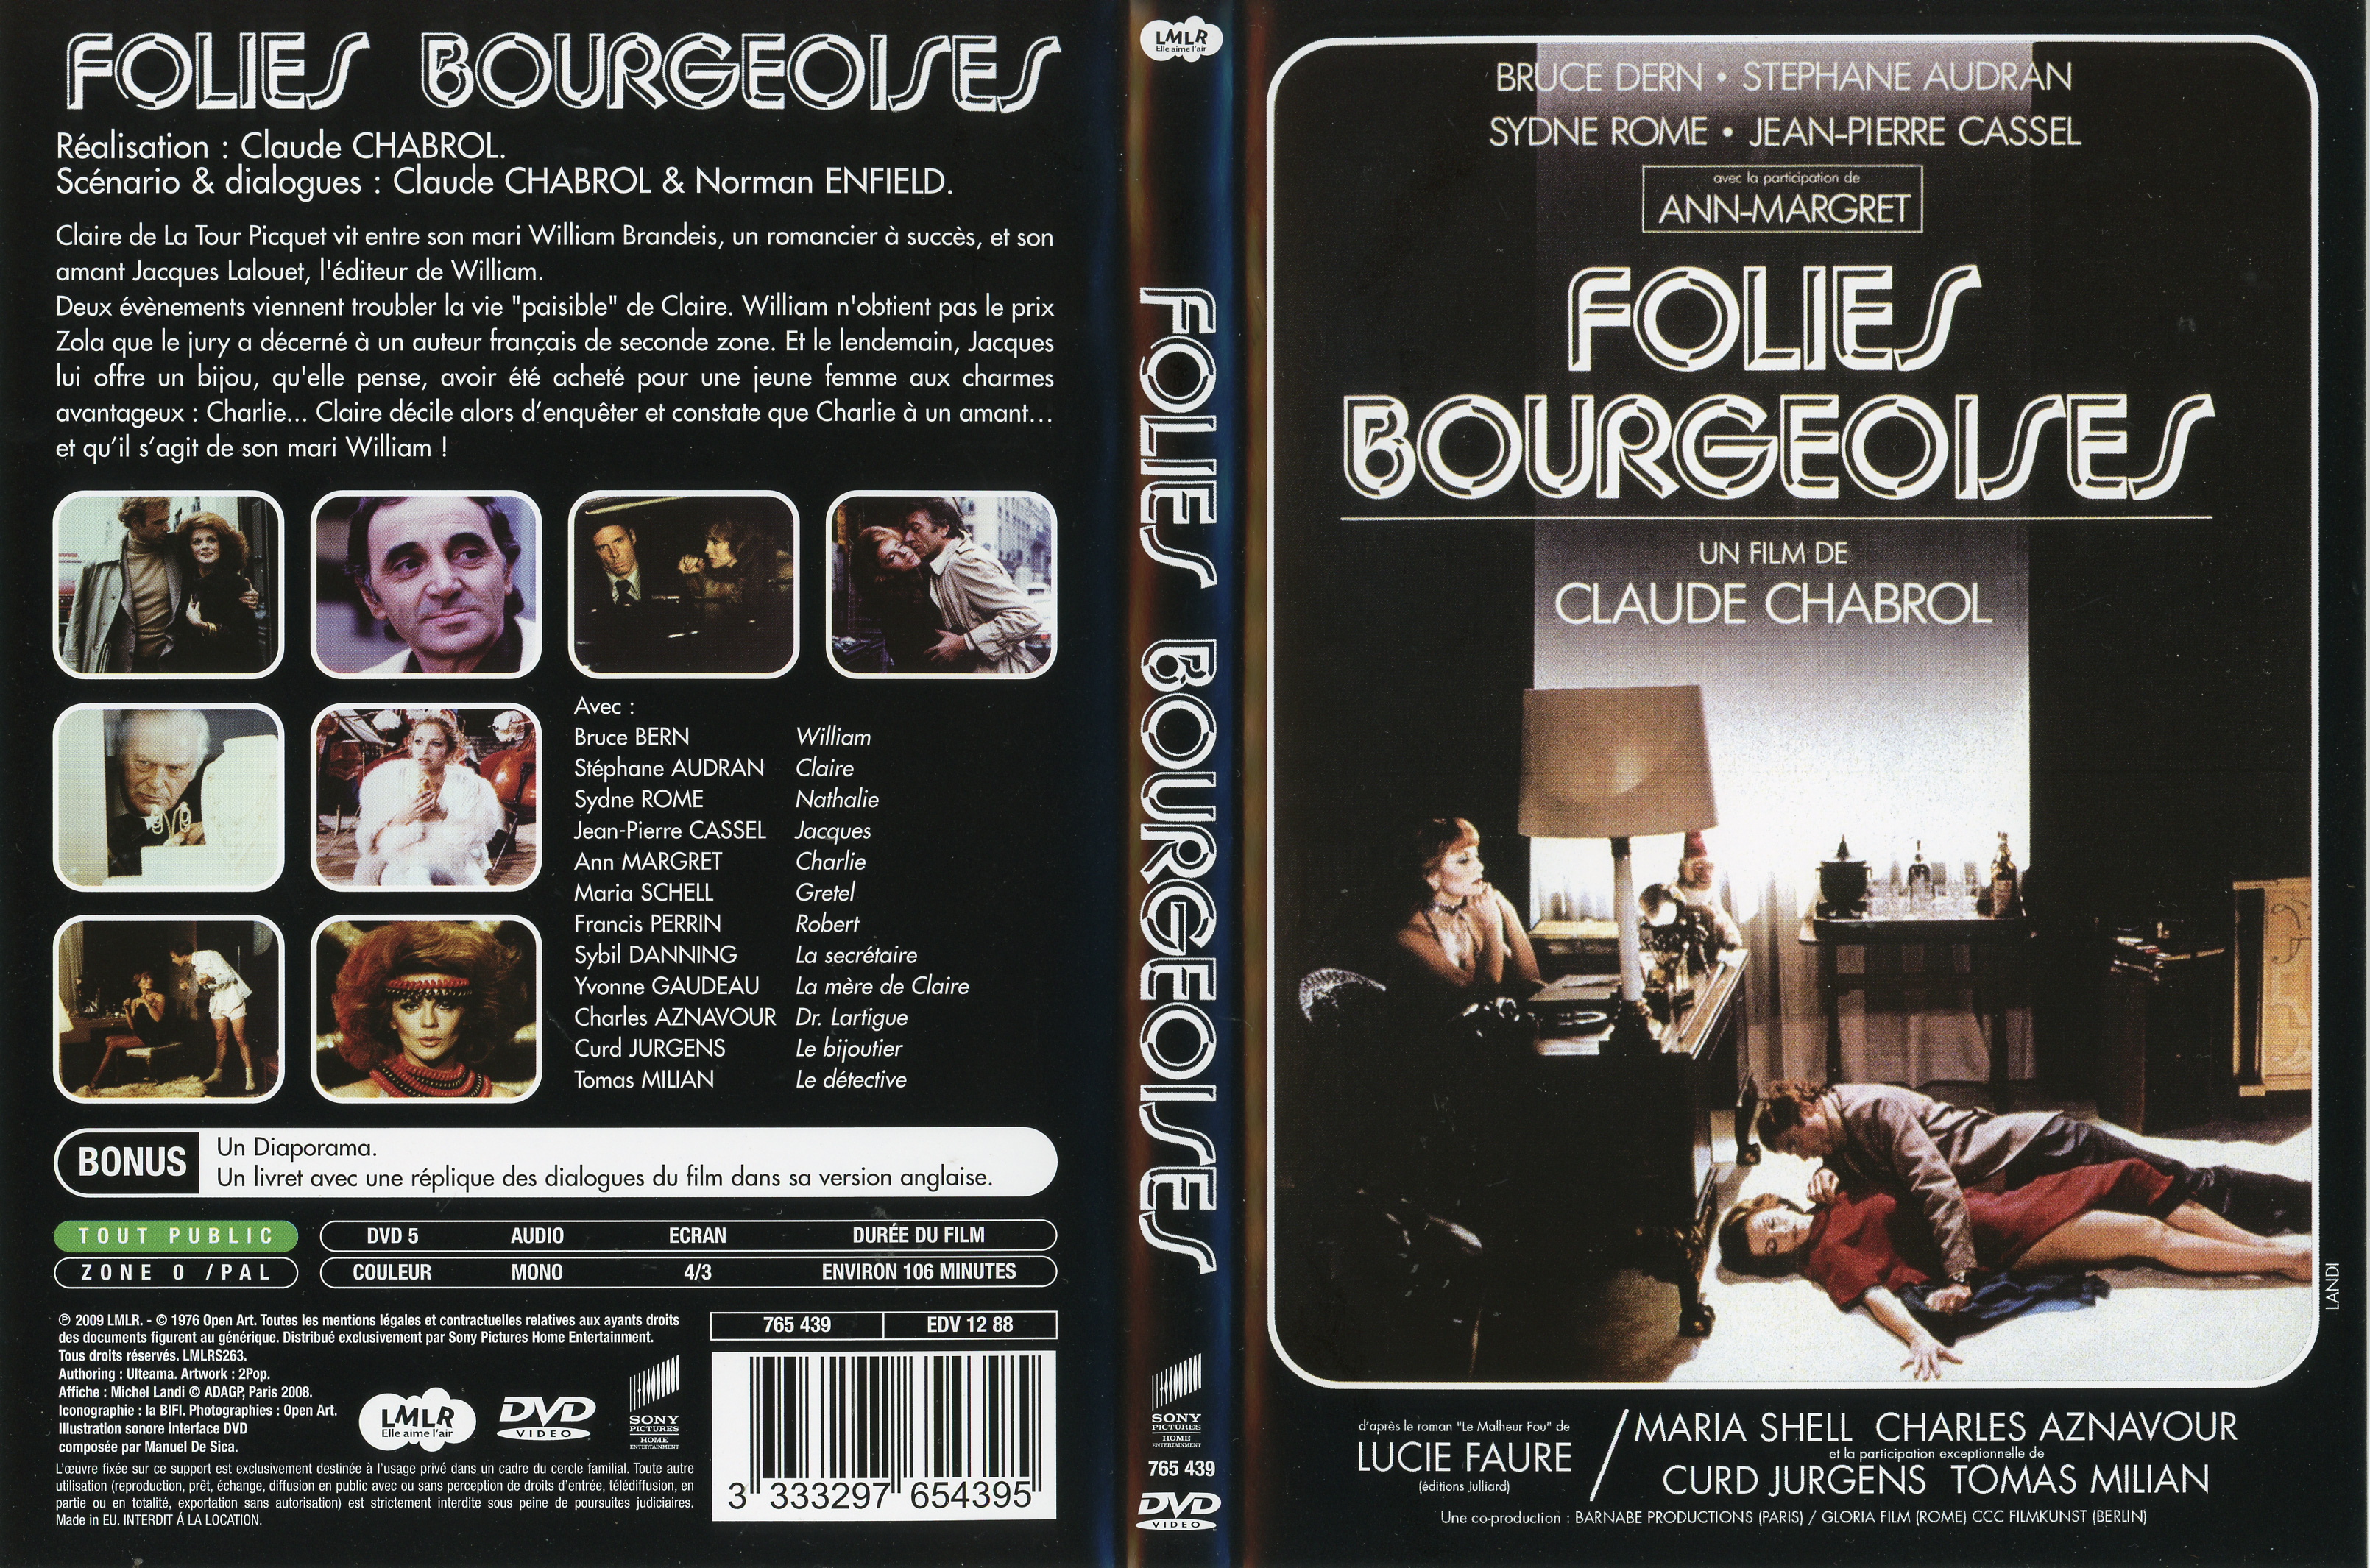 Jaquette DVD Folies bourgeoises